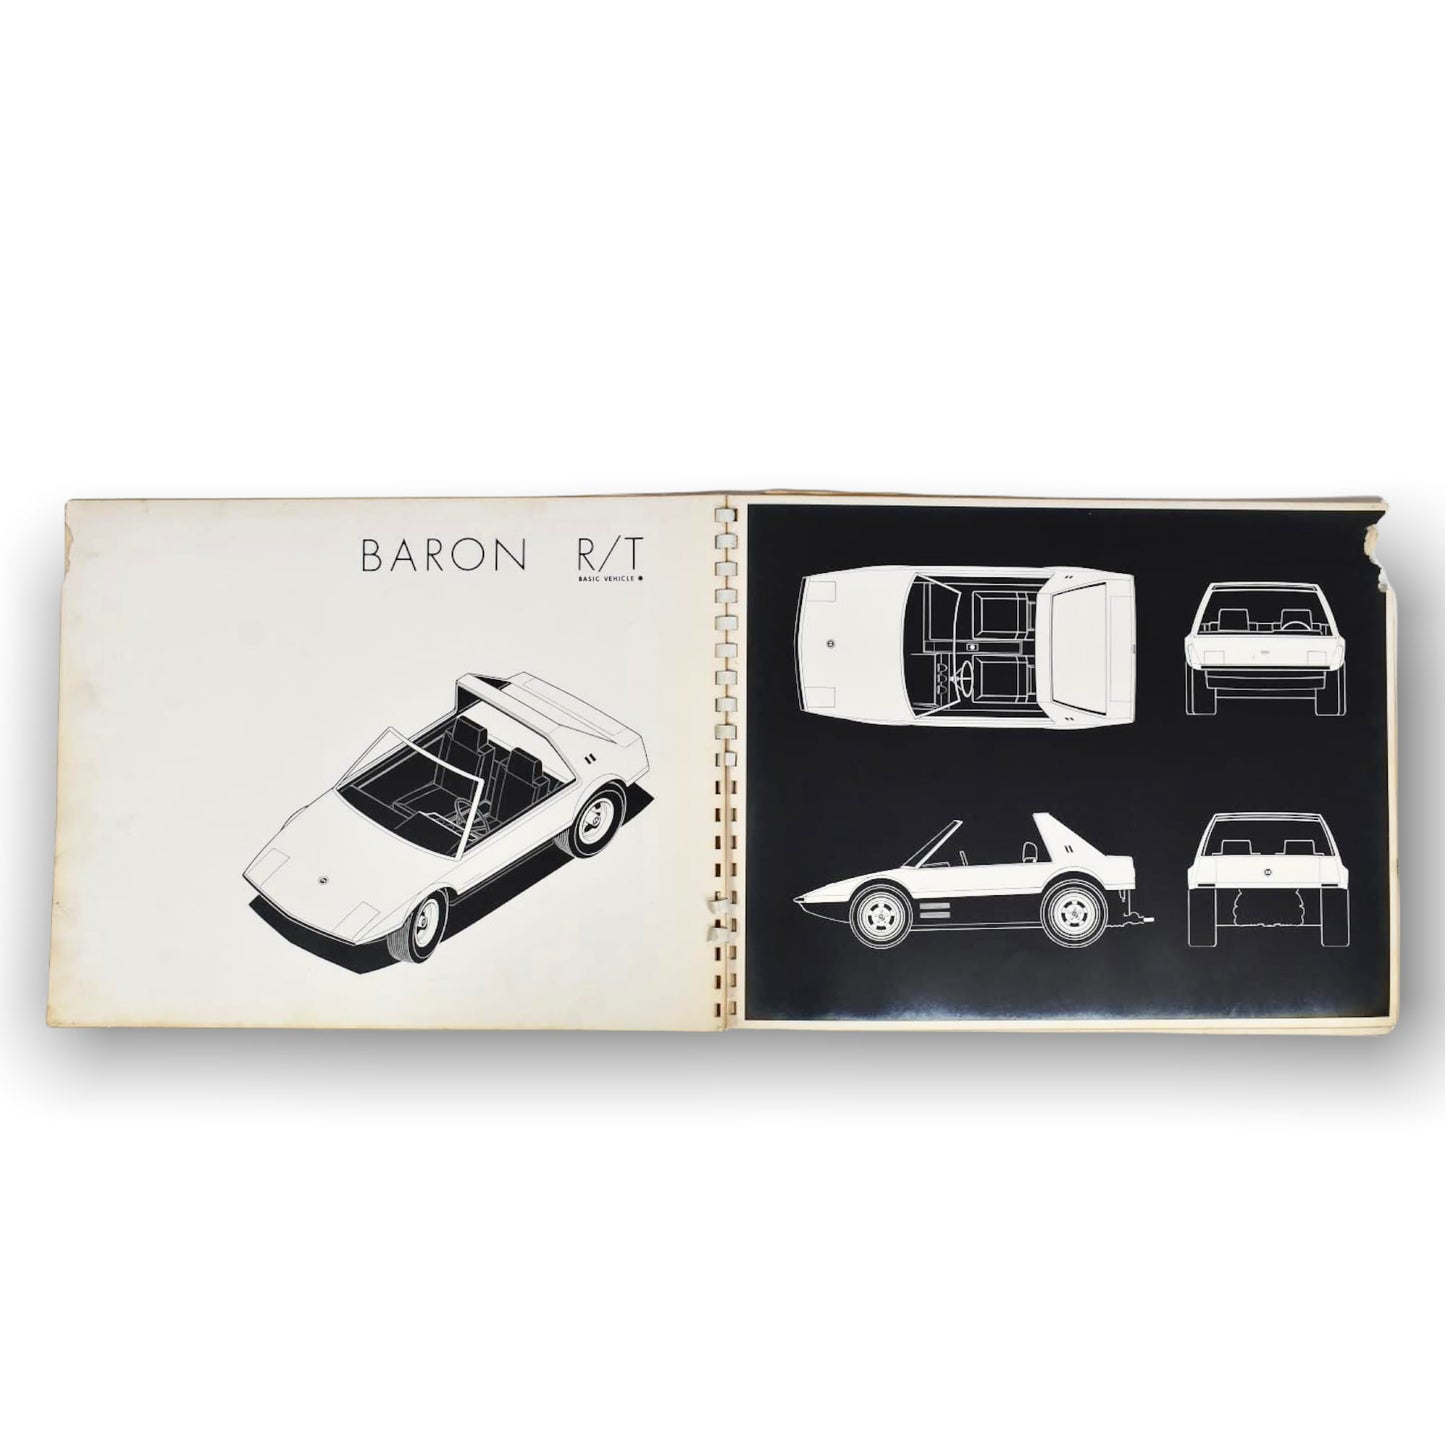 Baron R/T - 1960's Concept Car Original Presentation 1/1 + NFT 3D Model Movie